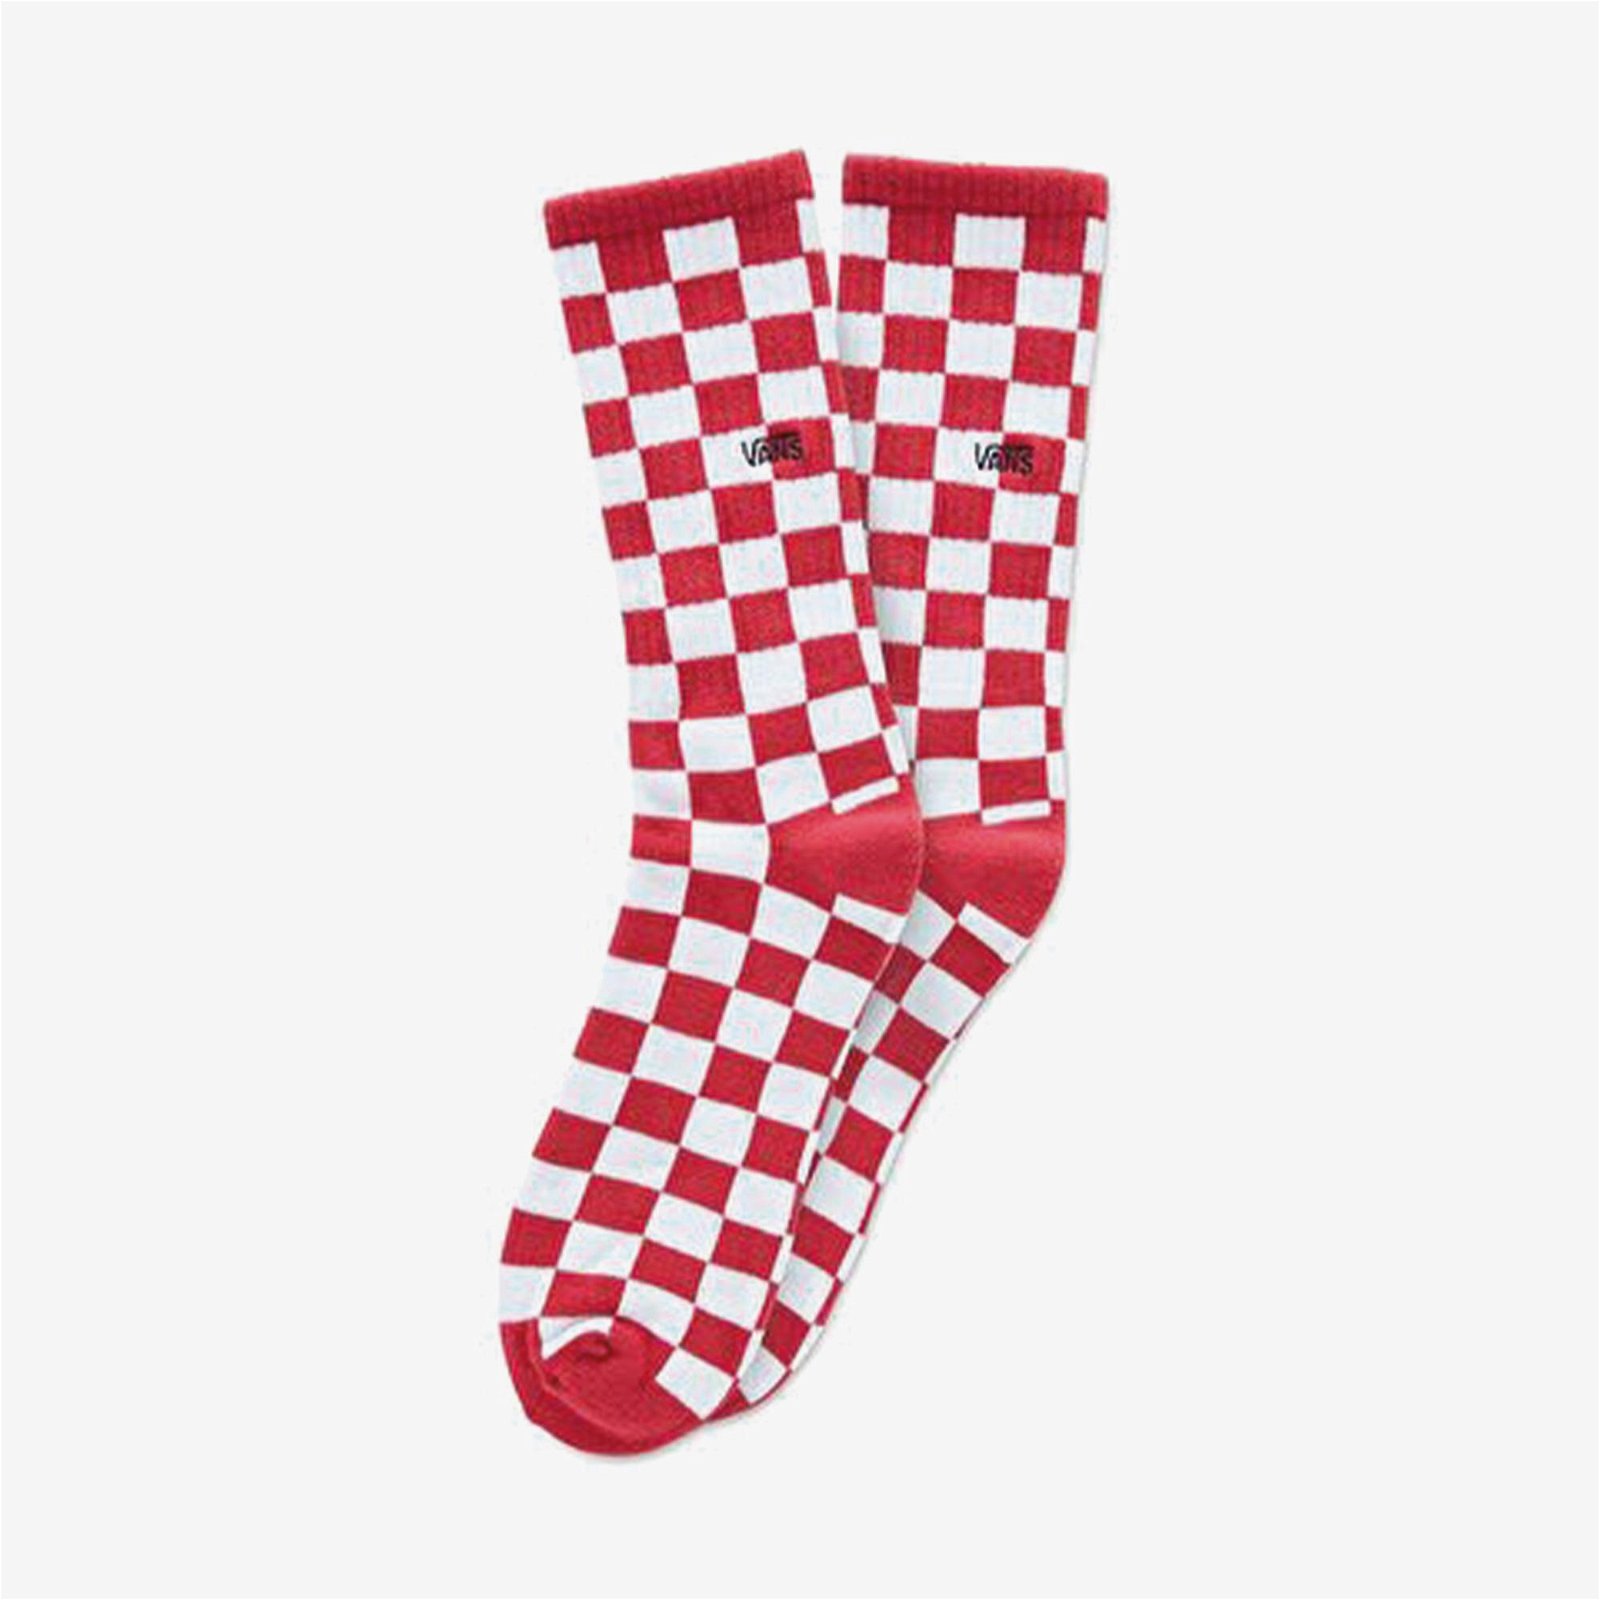 Vans Checkerboard Crew II Erkek Kırmızı Çorap